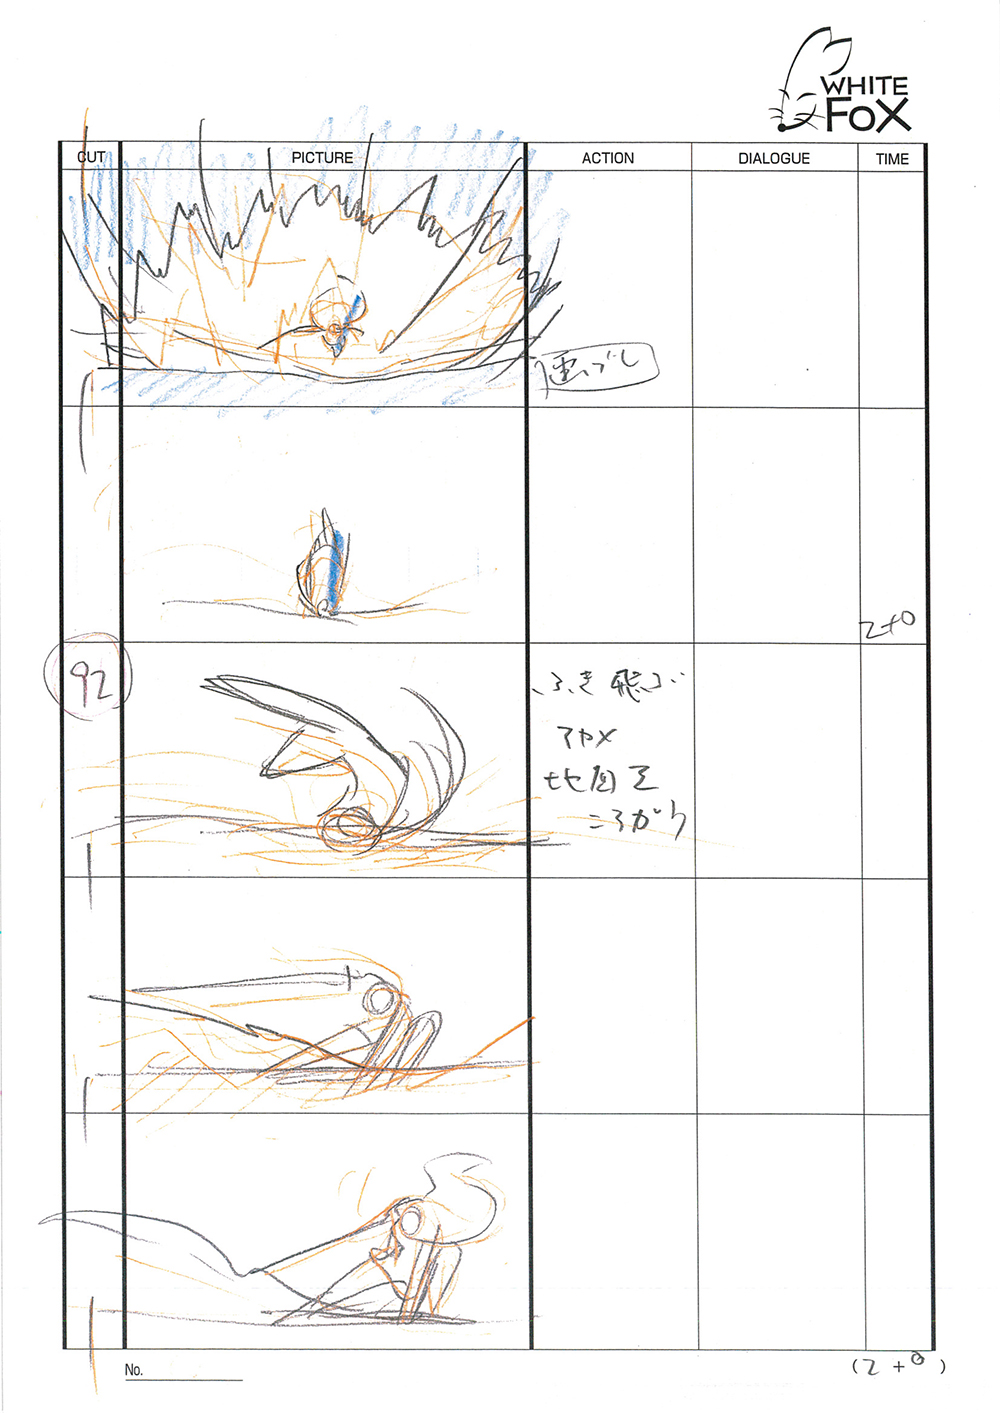 Akame ga Kill Episode 24 Storyboard Leak 047